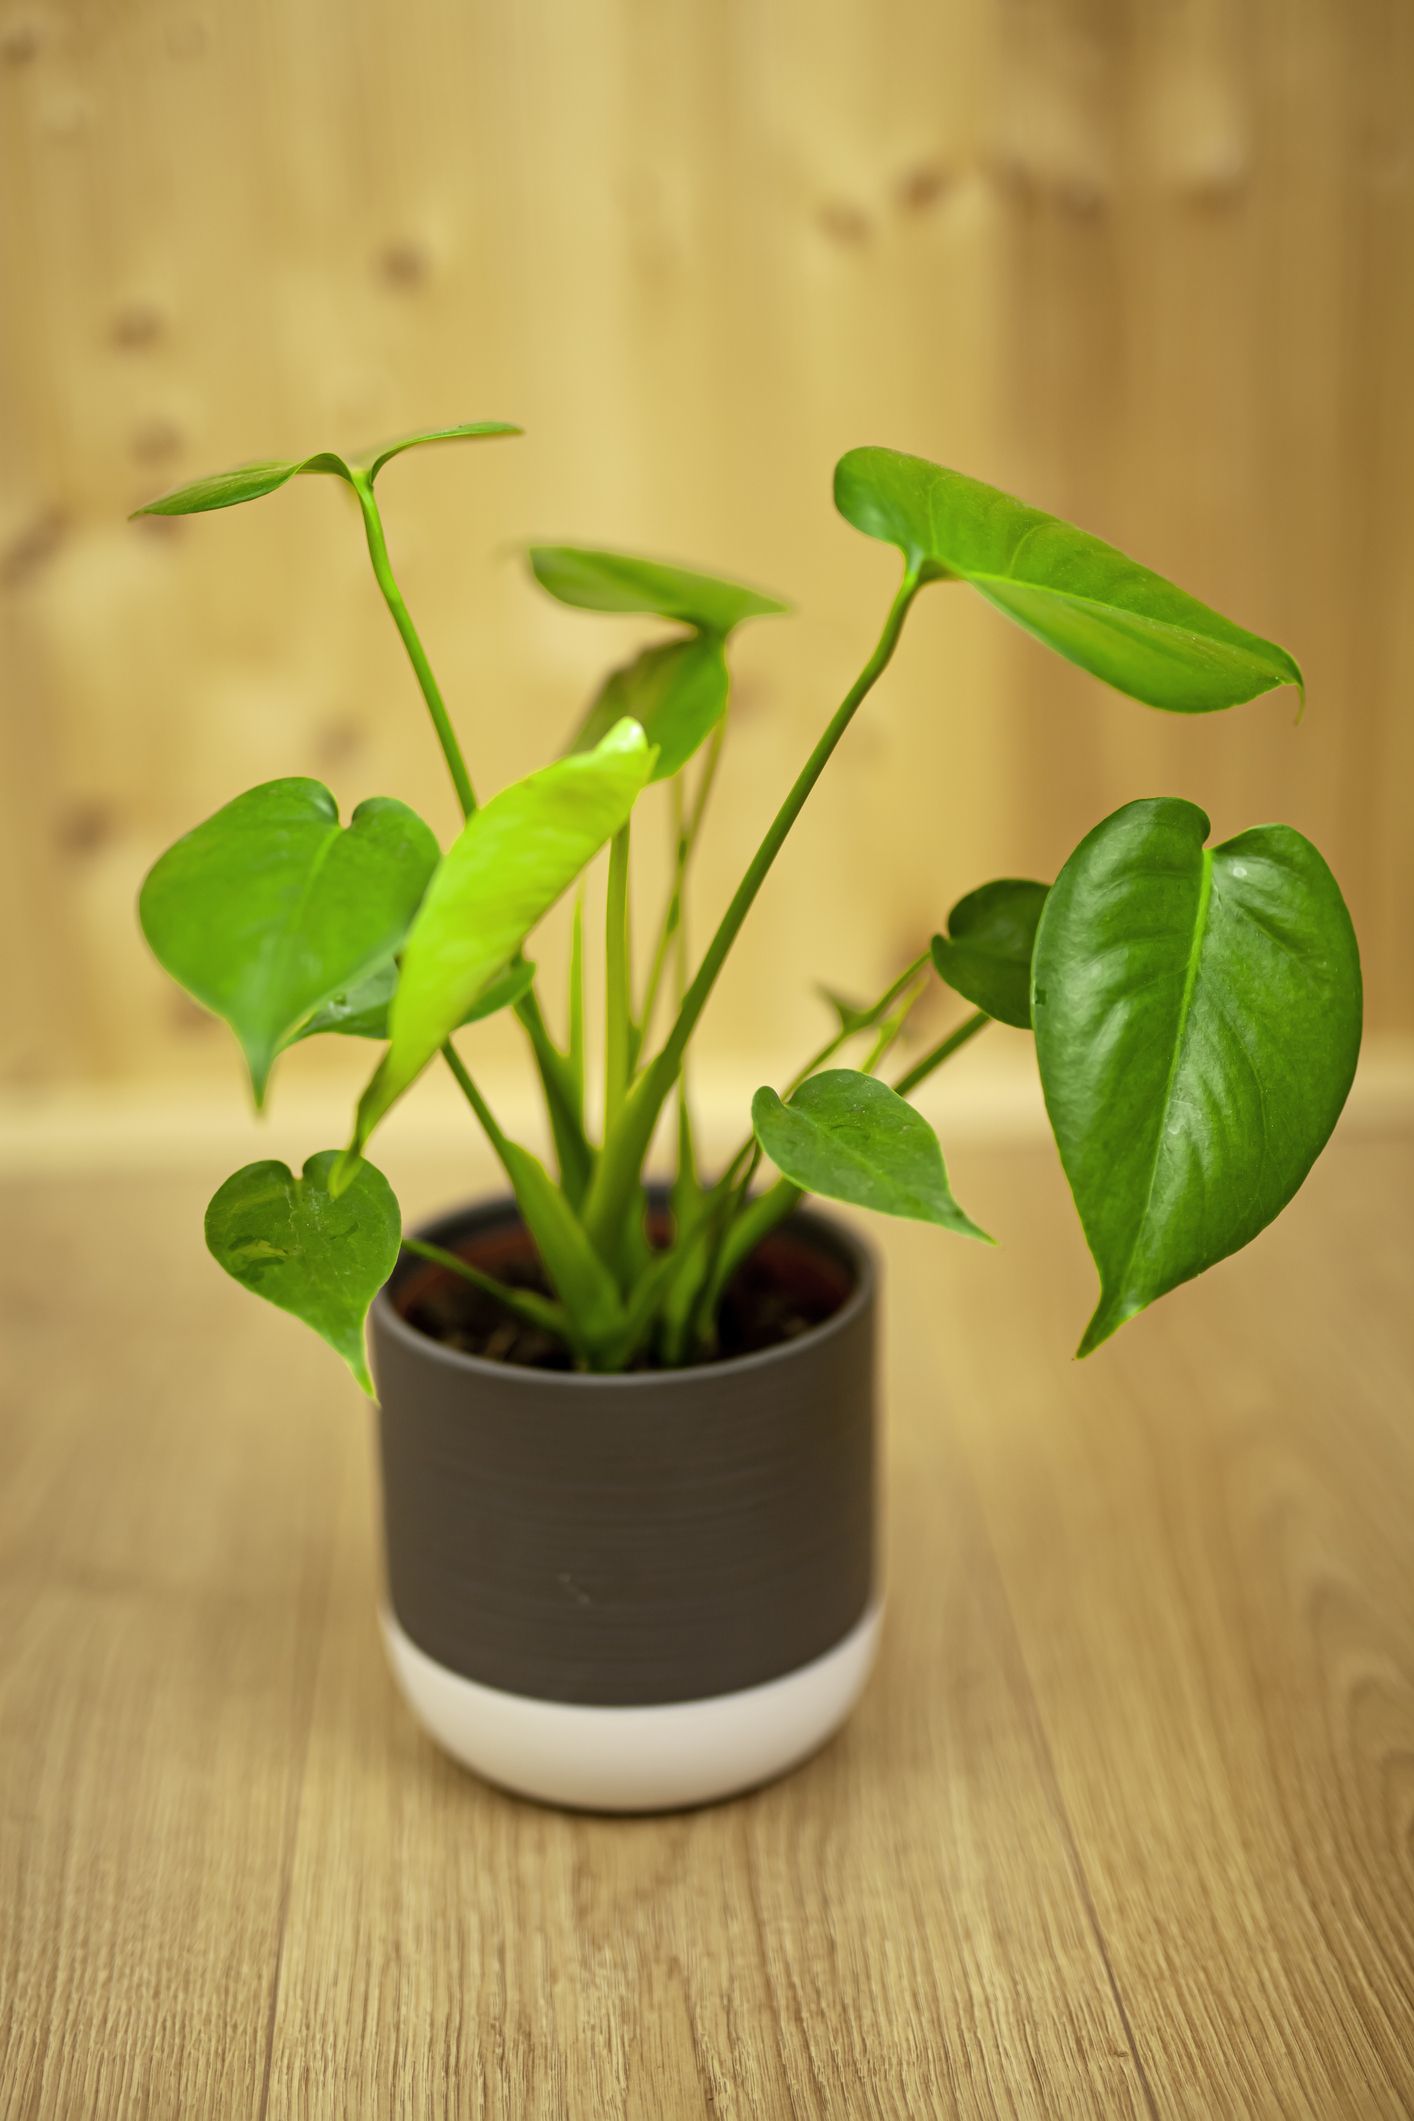 29 Best Low-Light Indoor Plants 2023 - Plants That Don't Need Light